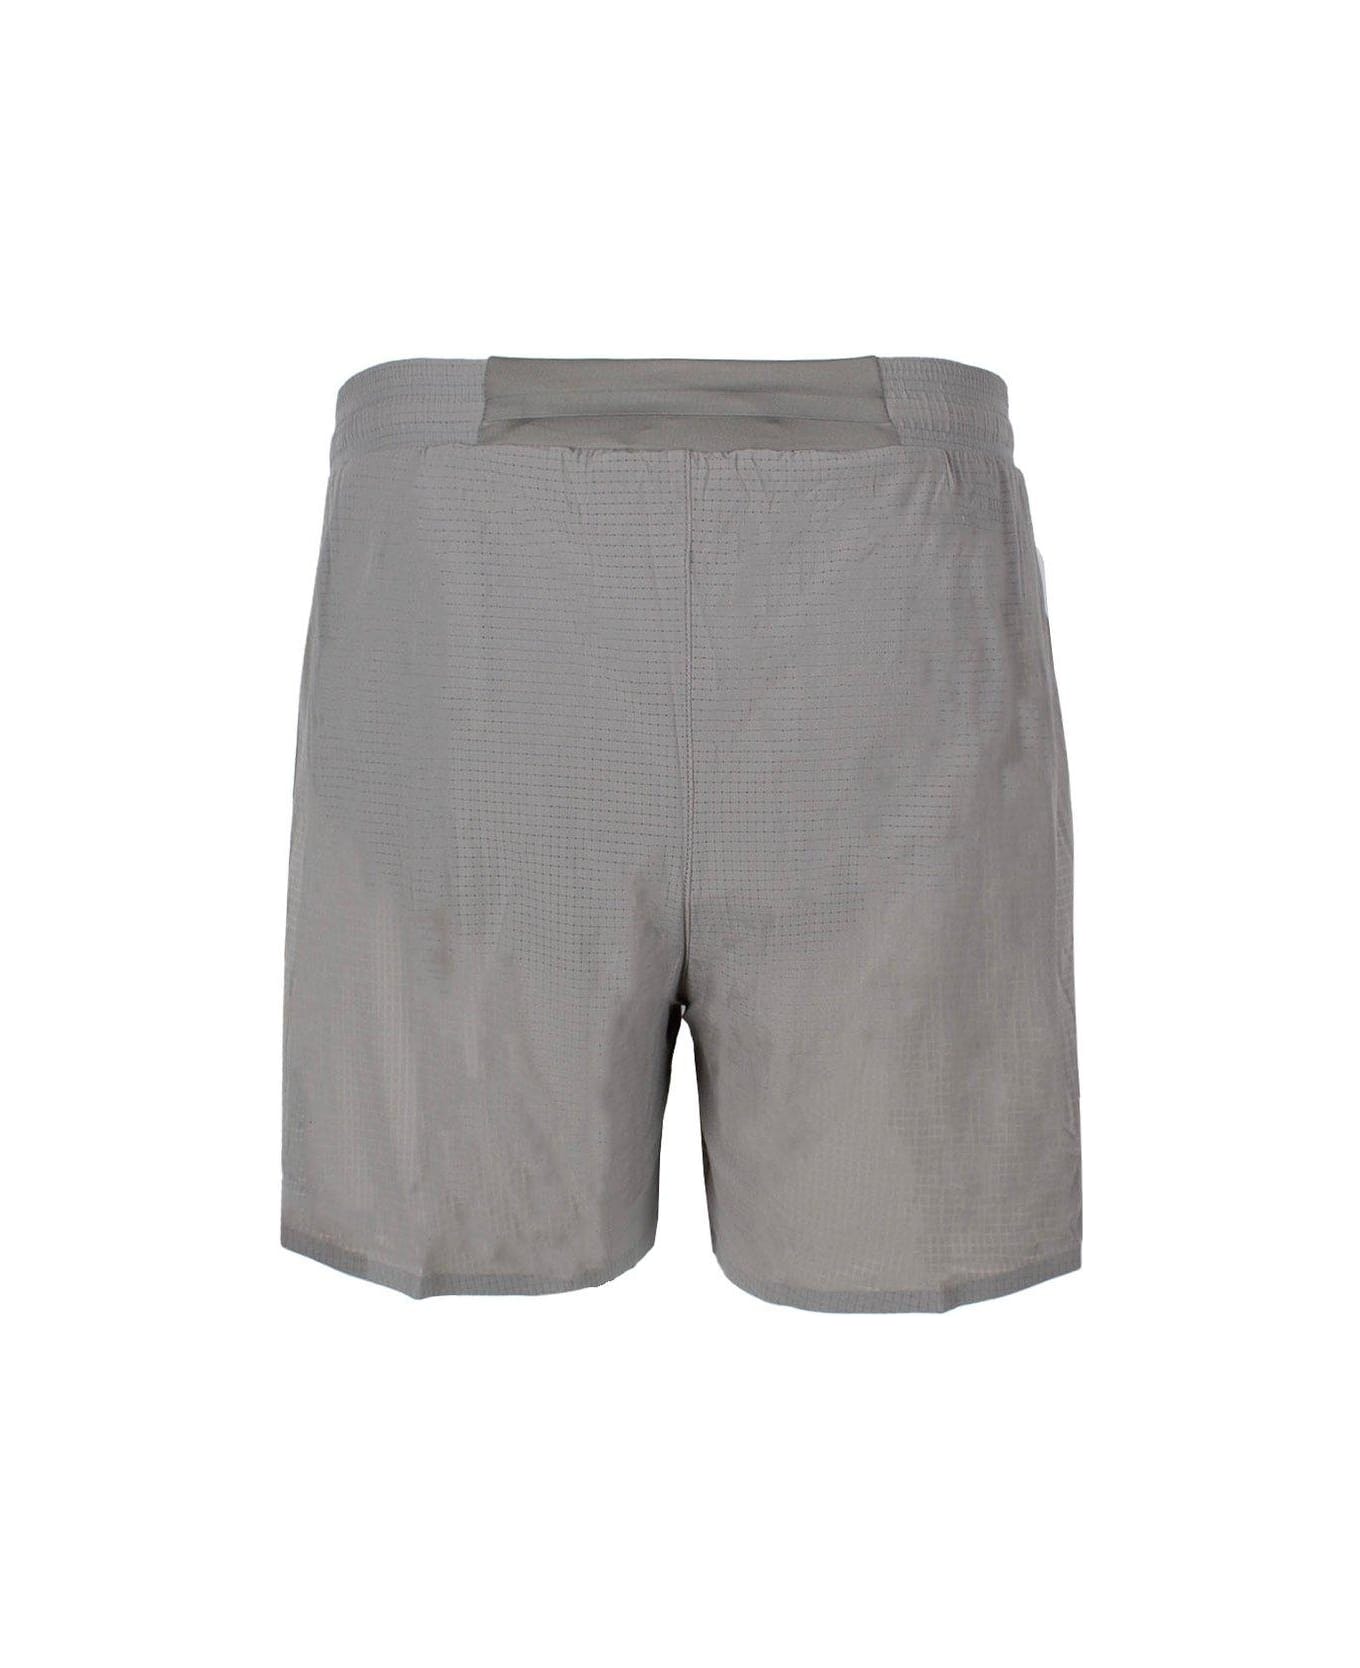 Y-3 Elastic Waist Runner Shorts - Solid Grey ショートパンツ